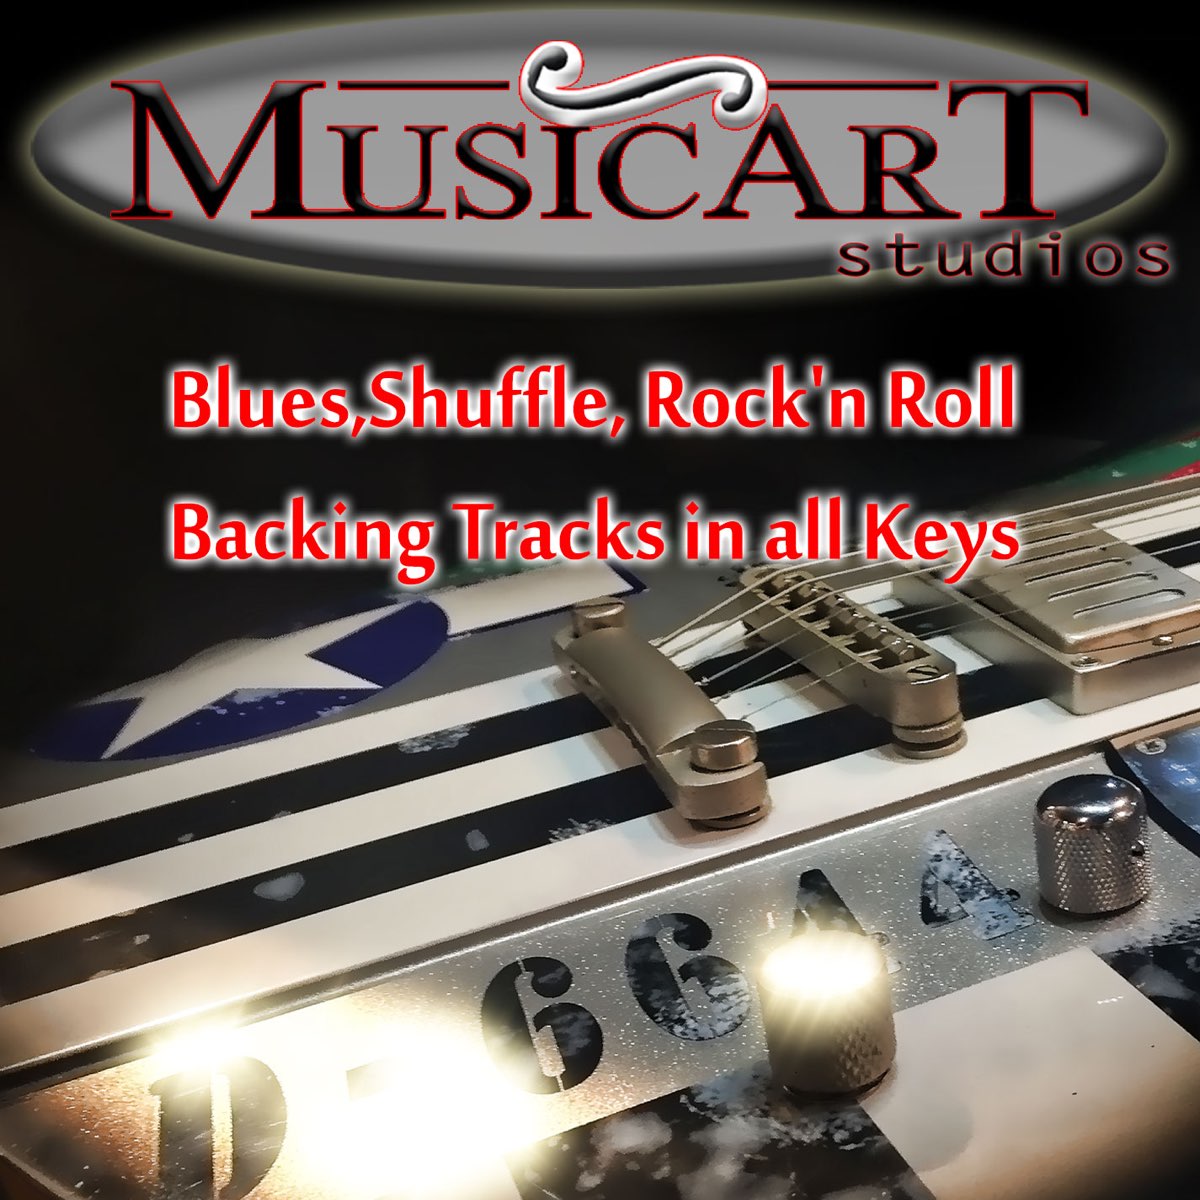 Blues,Shuffle, Rock'n Roll Backing Tracks in all Keys by Pier Gonella Jam &  MusicArt studio on Apple Music